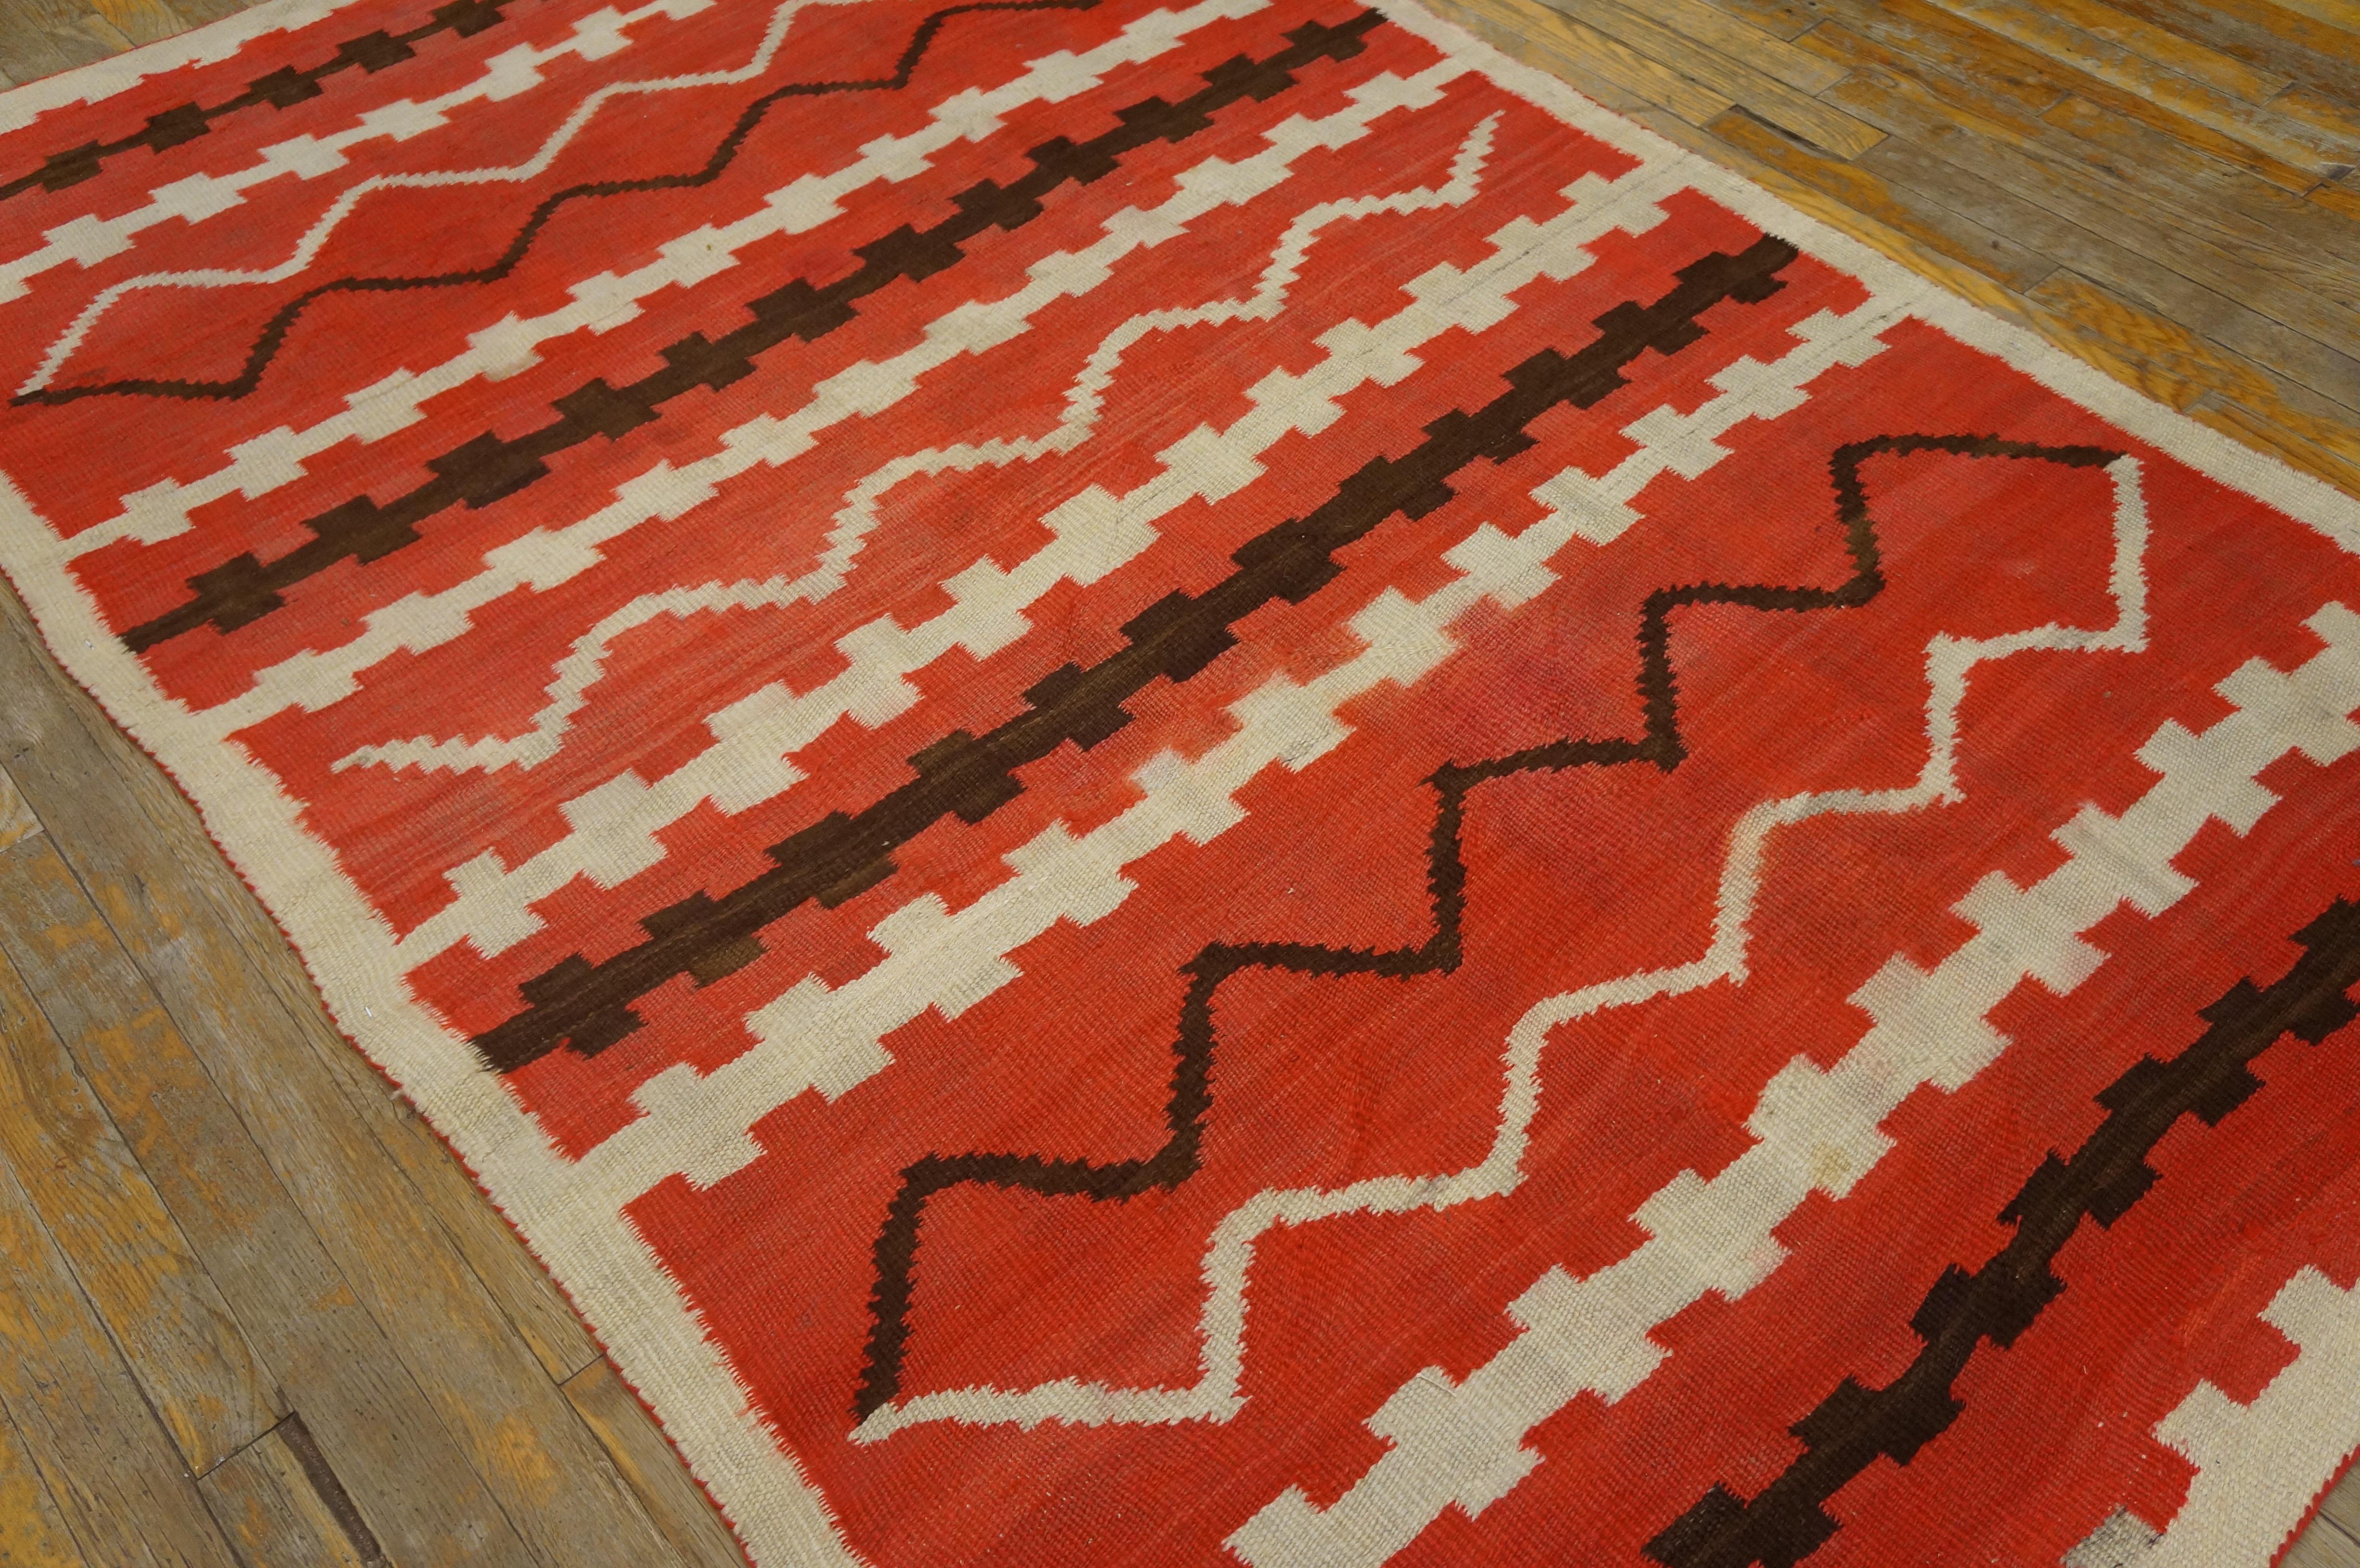 Late 19th Century 19th Century Transitional Period  Navajo Carpet ( 4'4